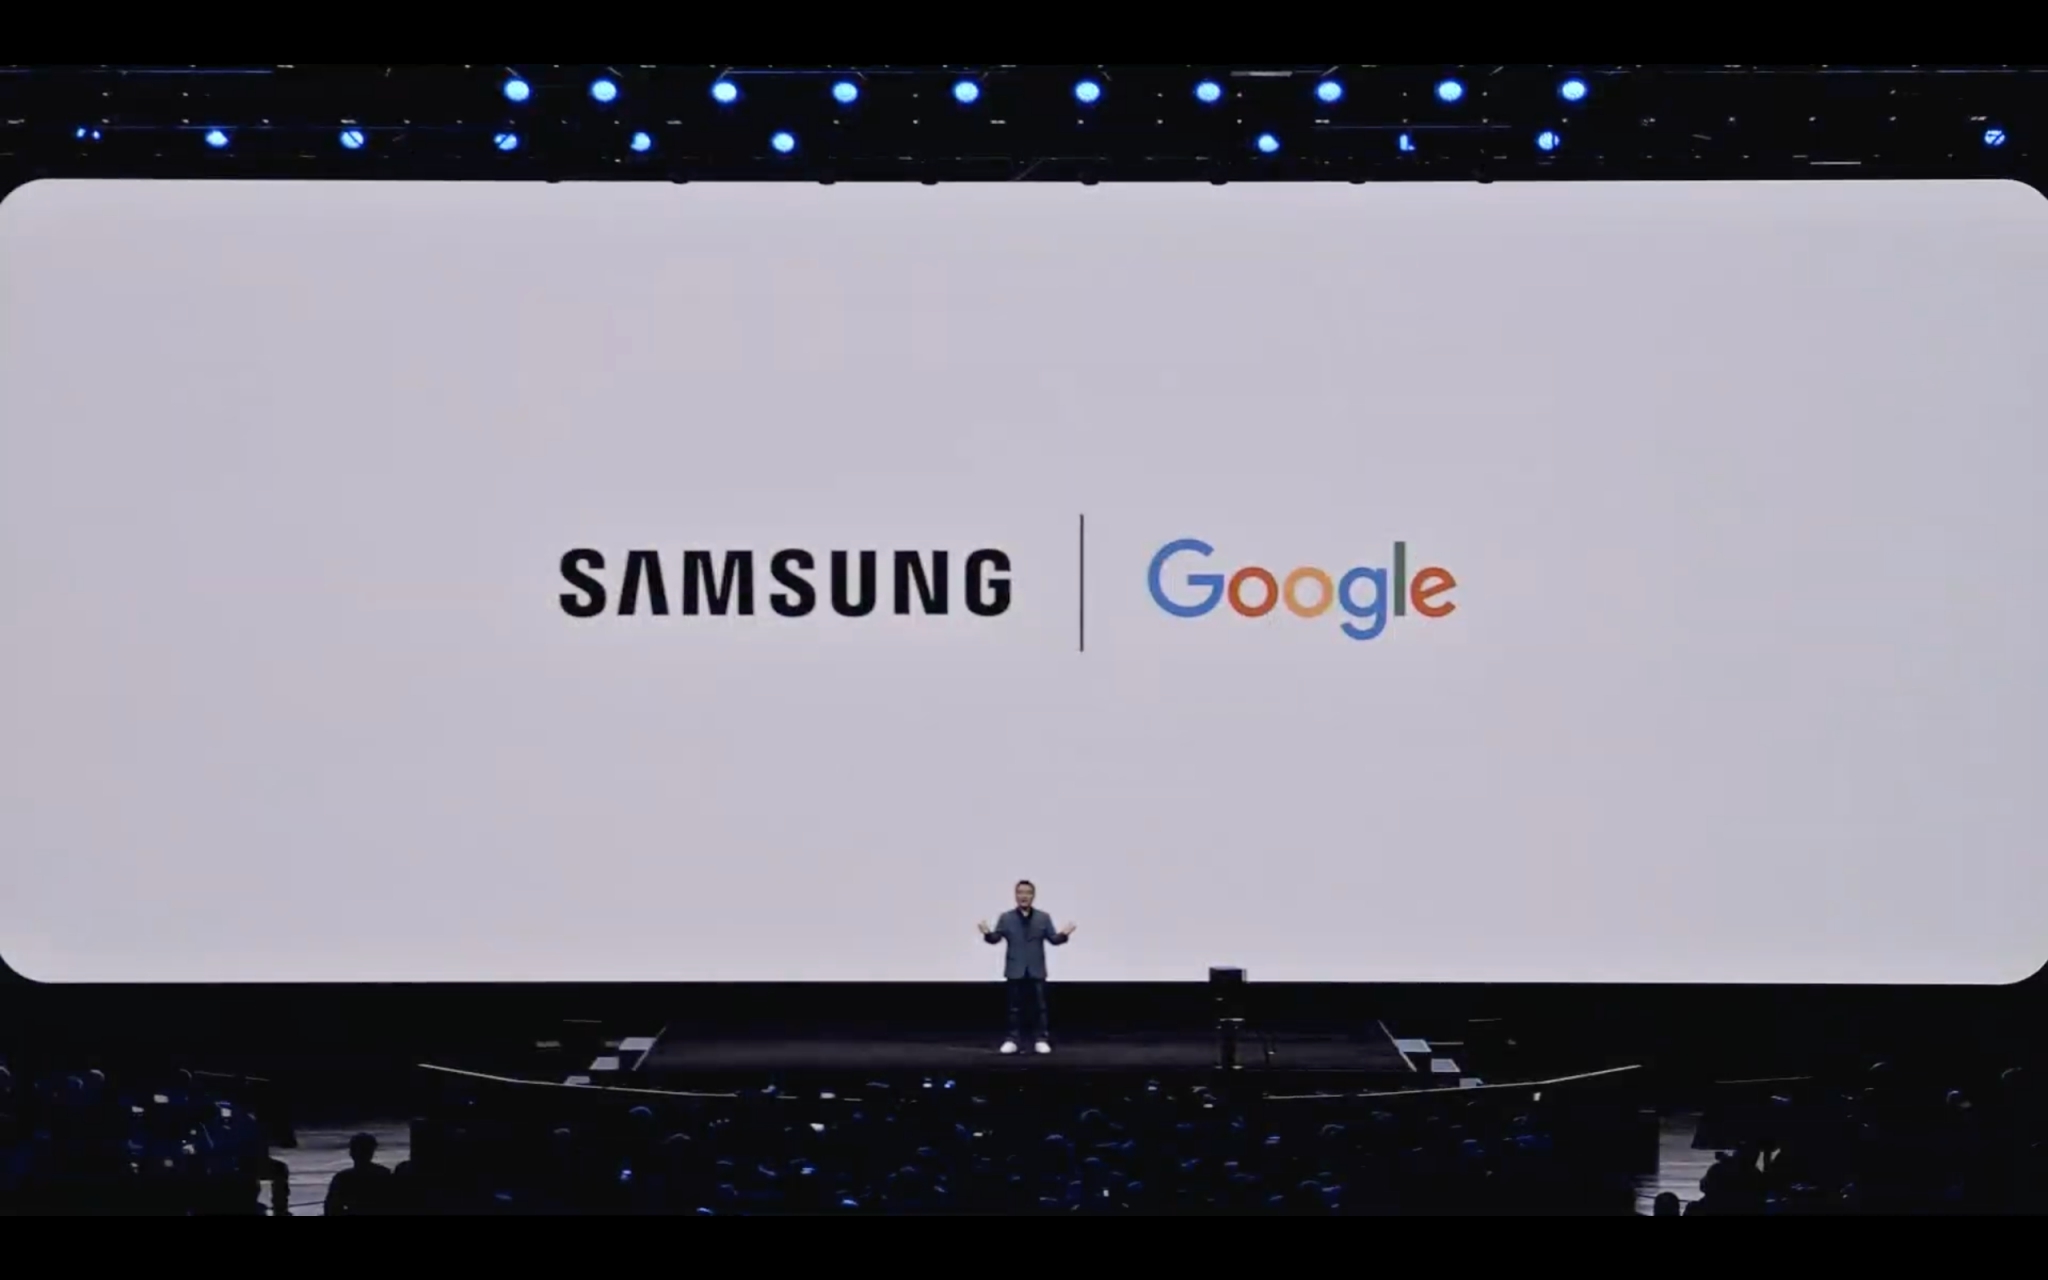 Samsung x Google